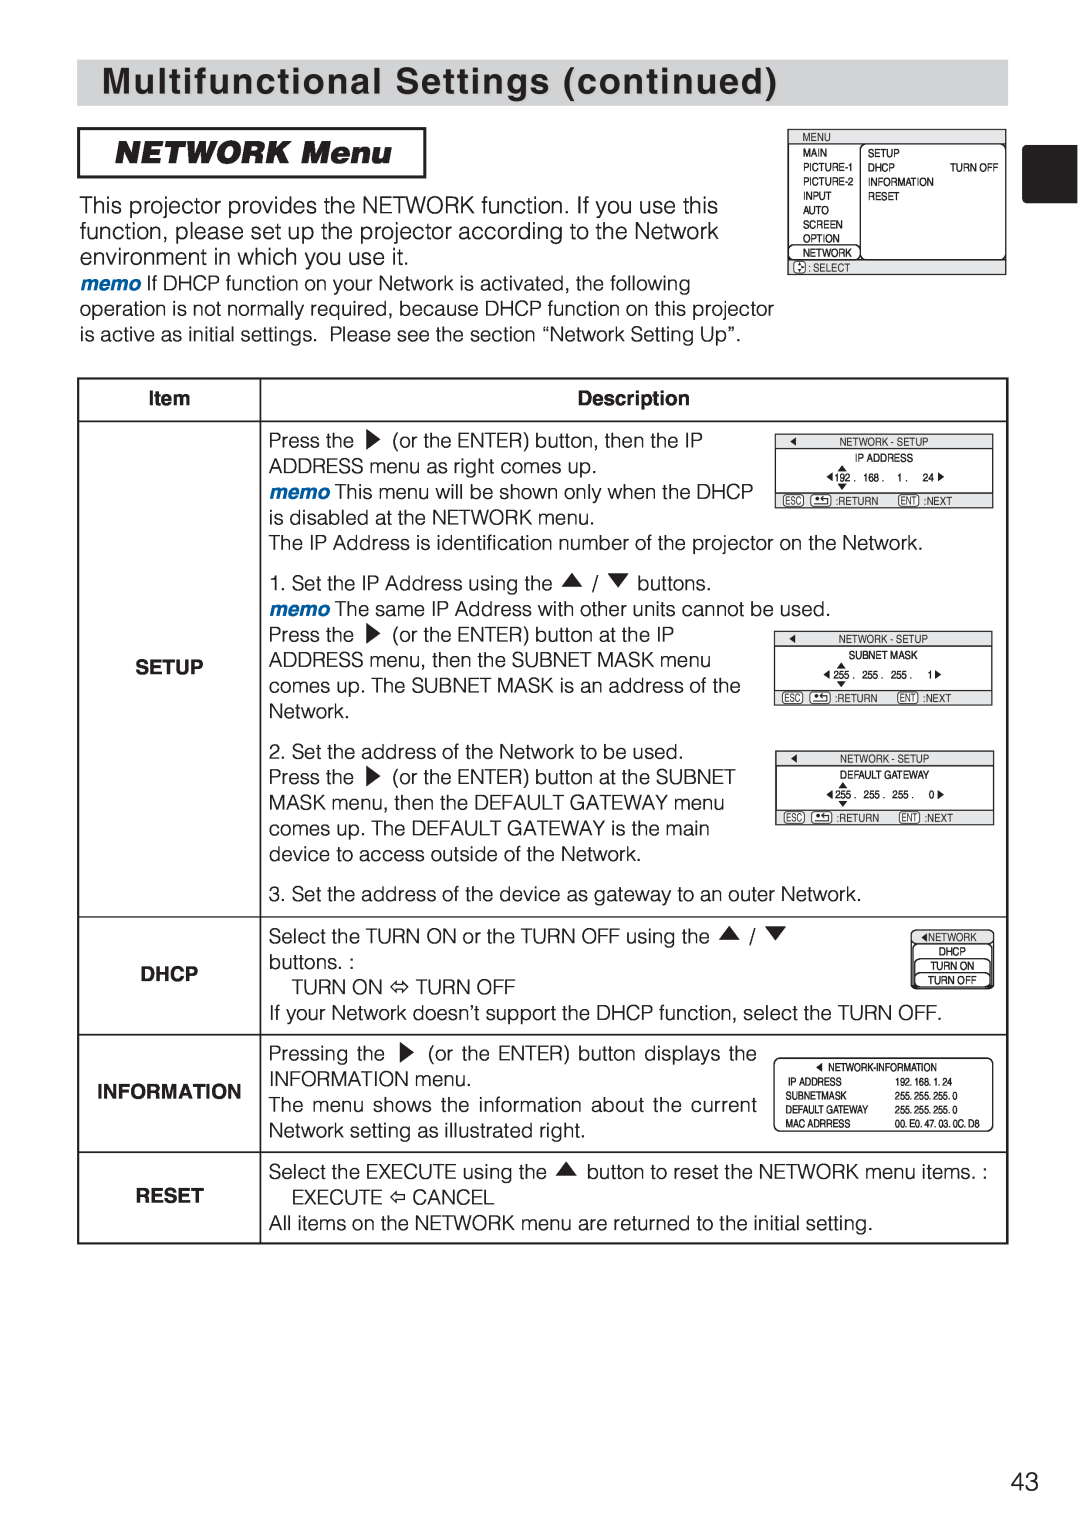 Toshiba TLP-SX3500 user manual NETWORK Menu, Multifunctional Settings continued 